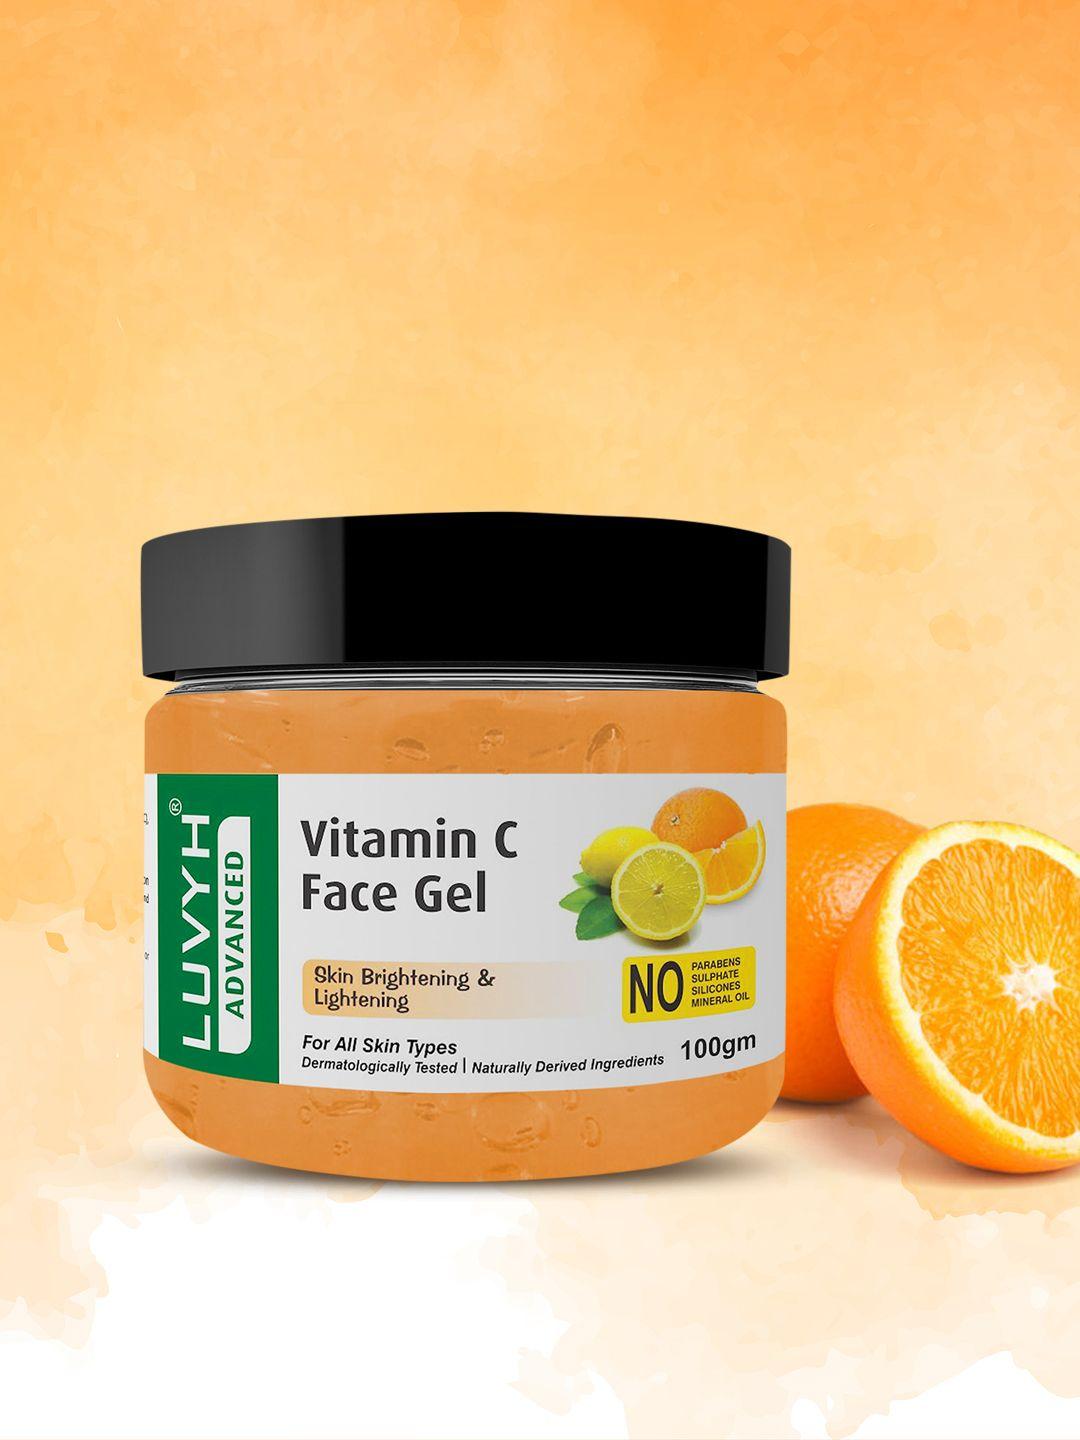 luvyh vitamin c face gel - 100 g